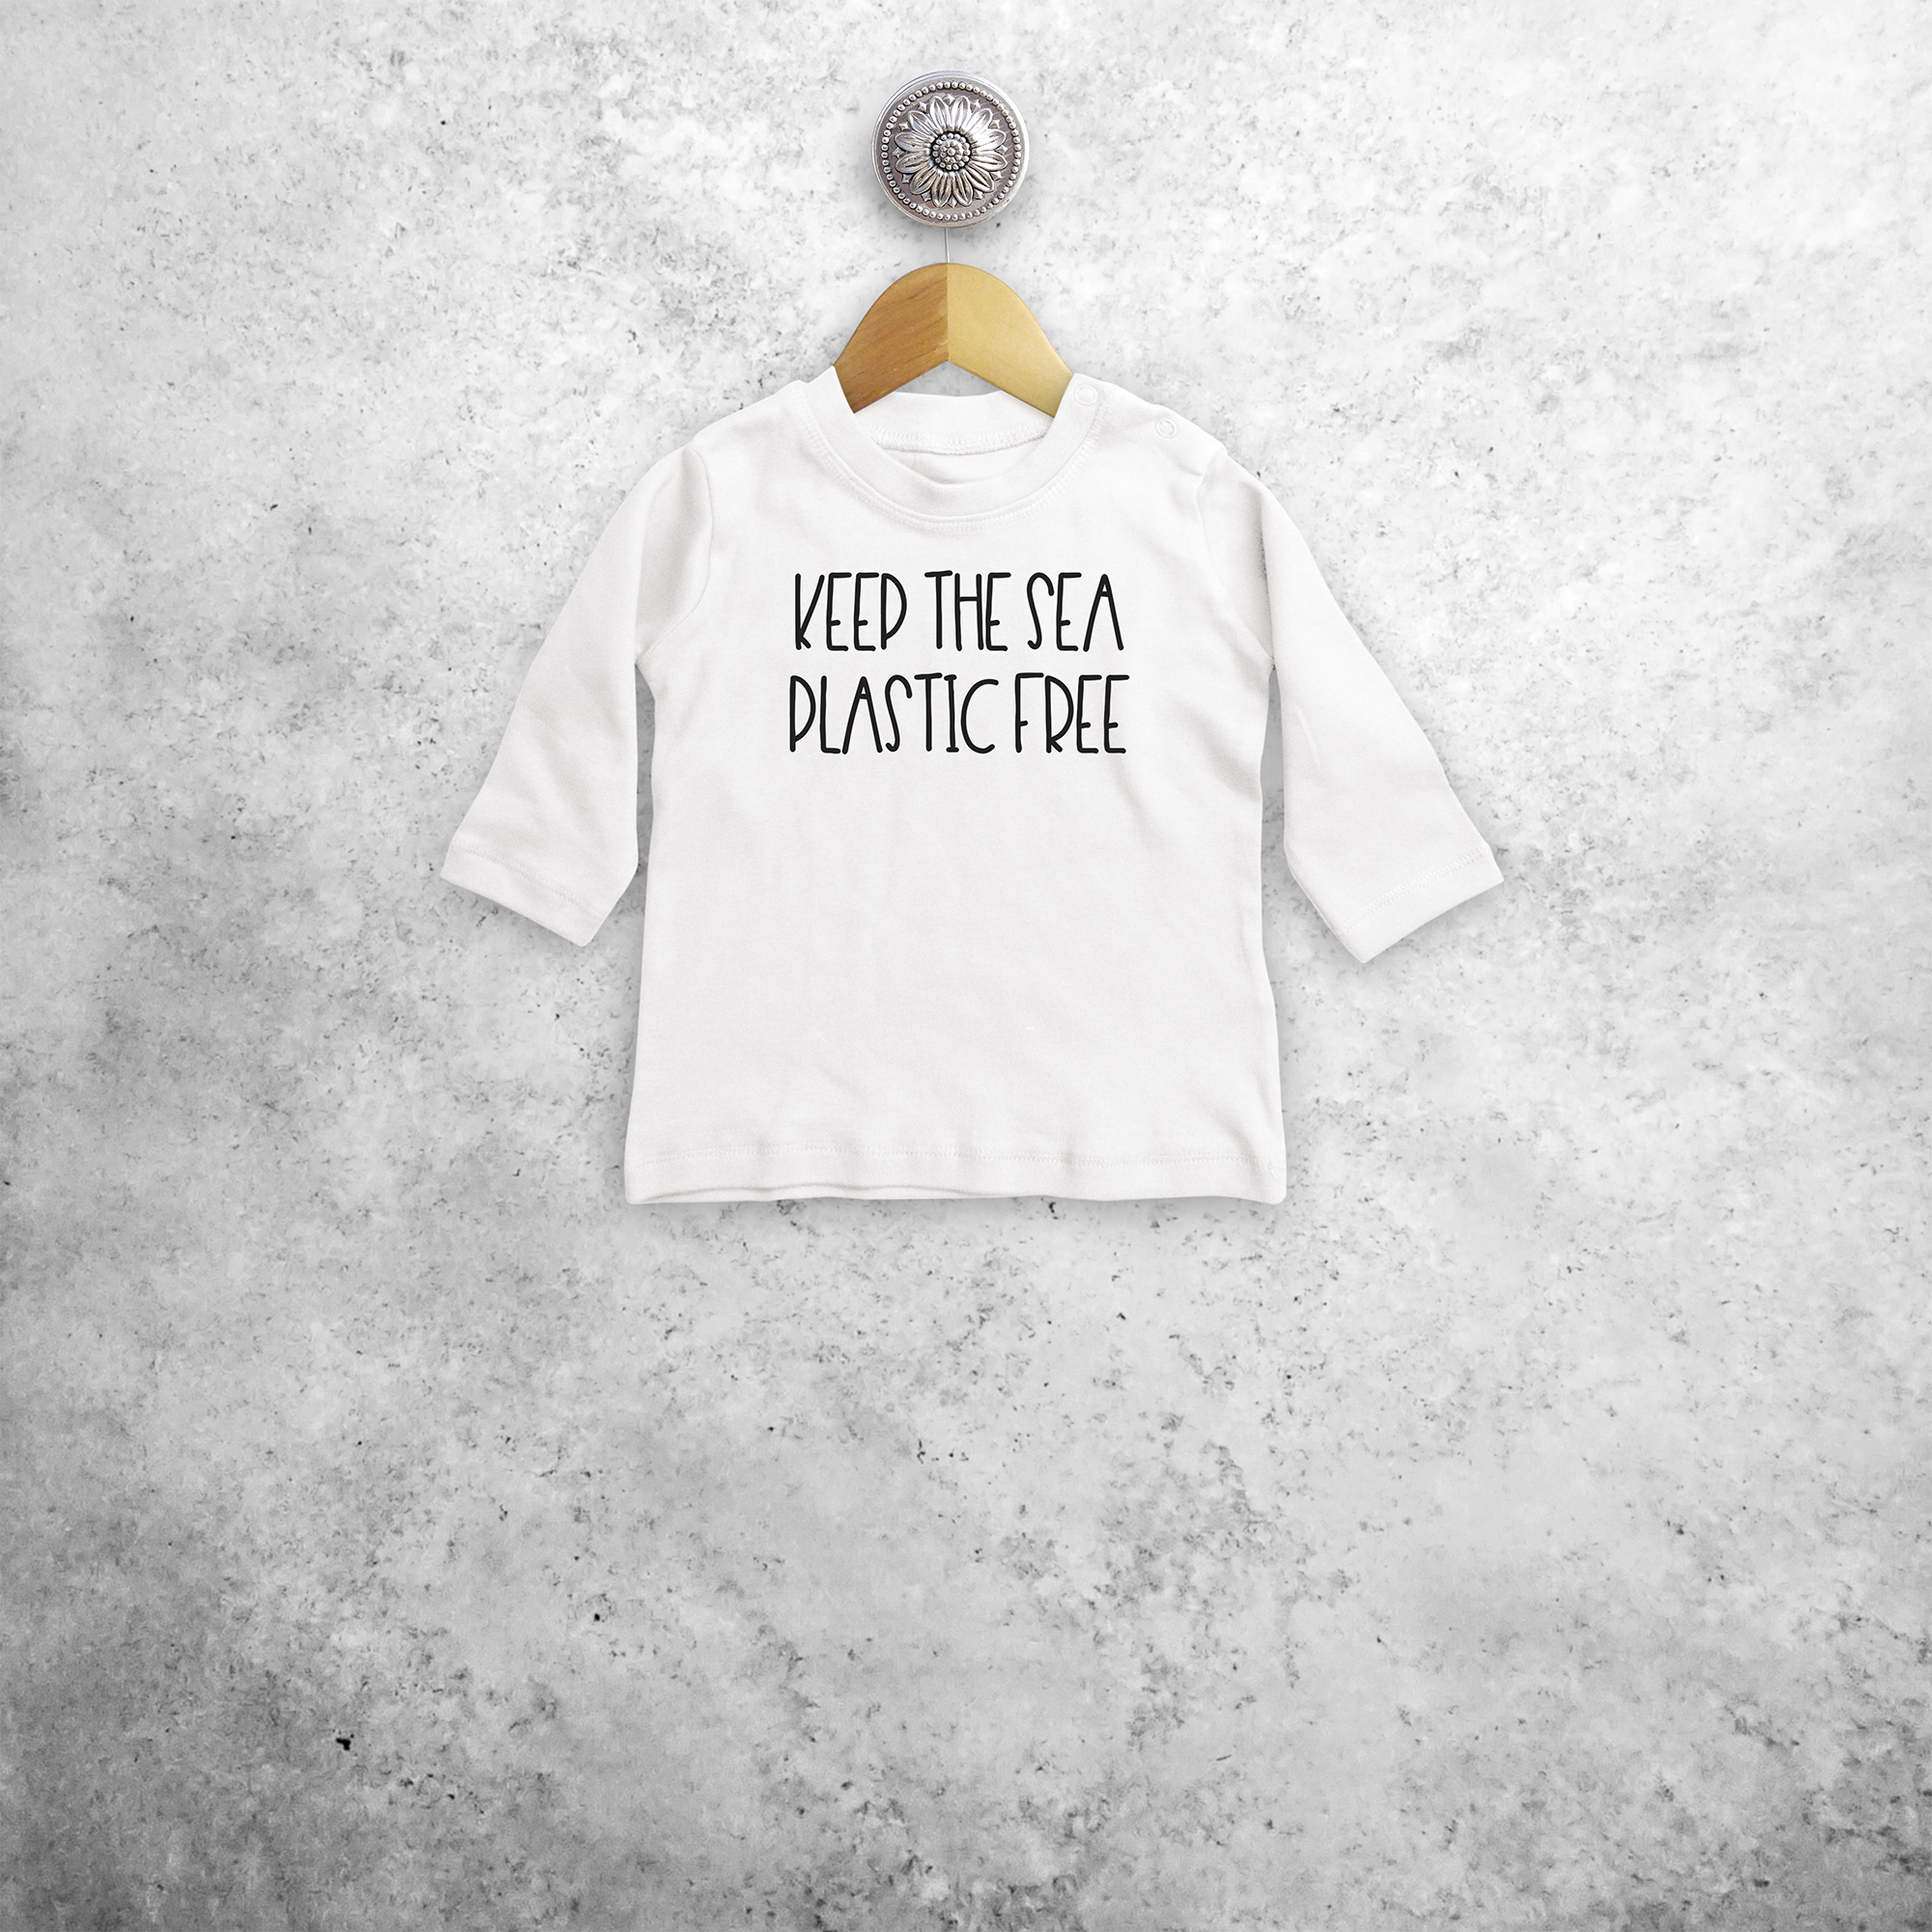 'Keep the sea plastic free' baby longsleeve shirt